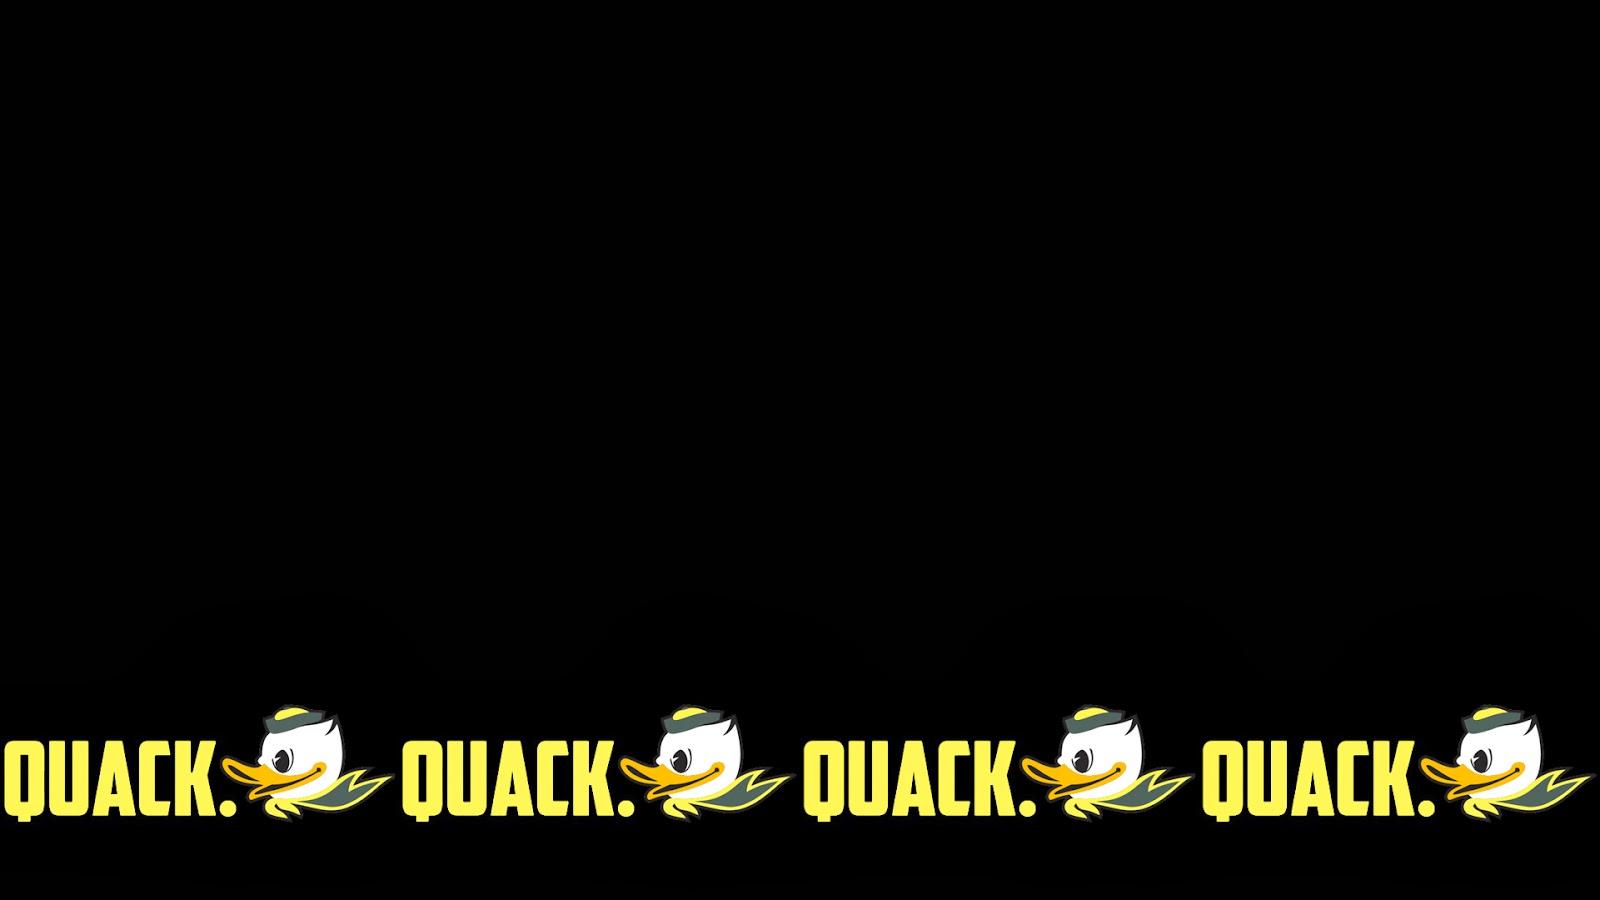 Free download Oregon Ducks Win The Day Wallpaper My oregon